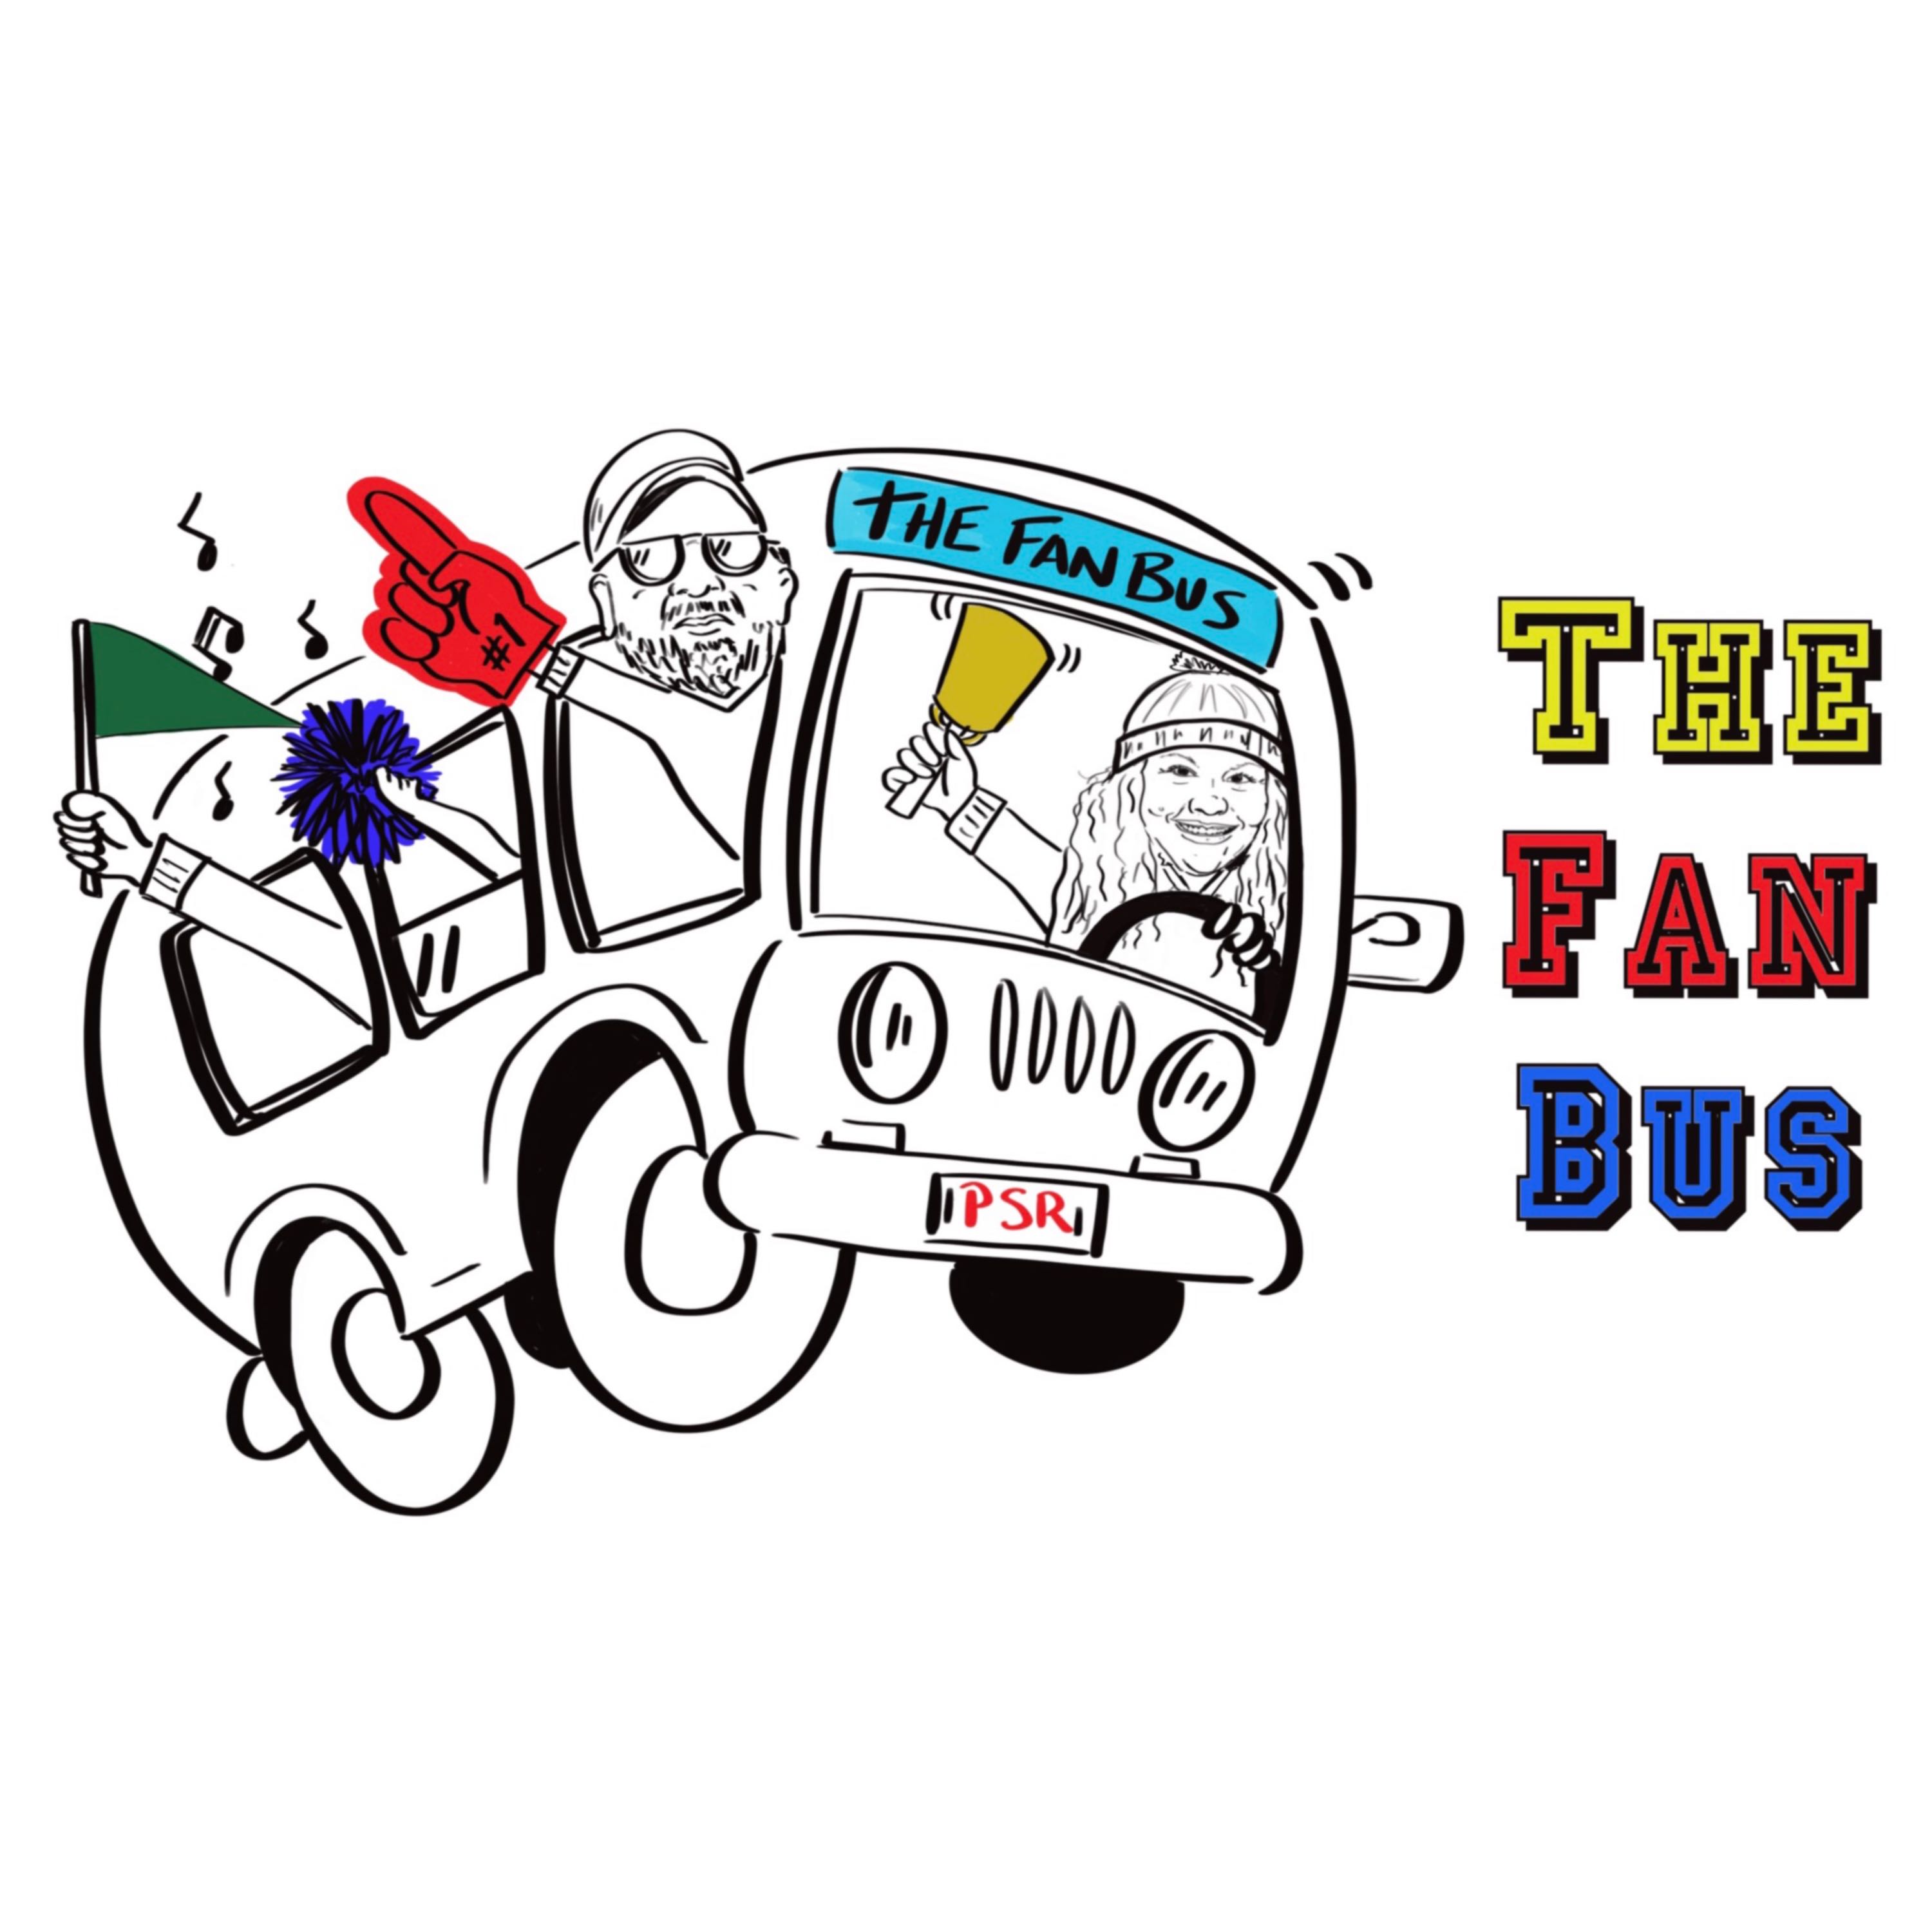 Artwork for The Fan Bus